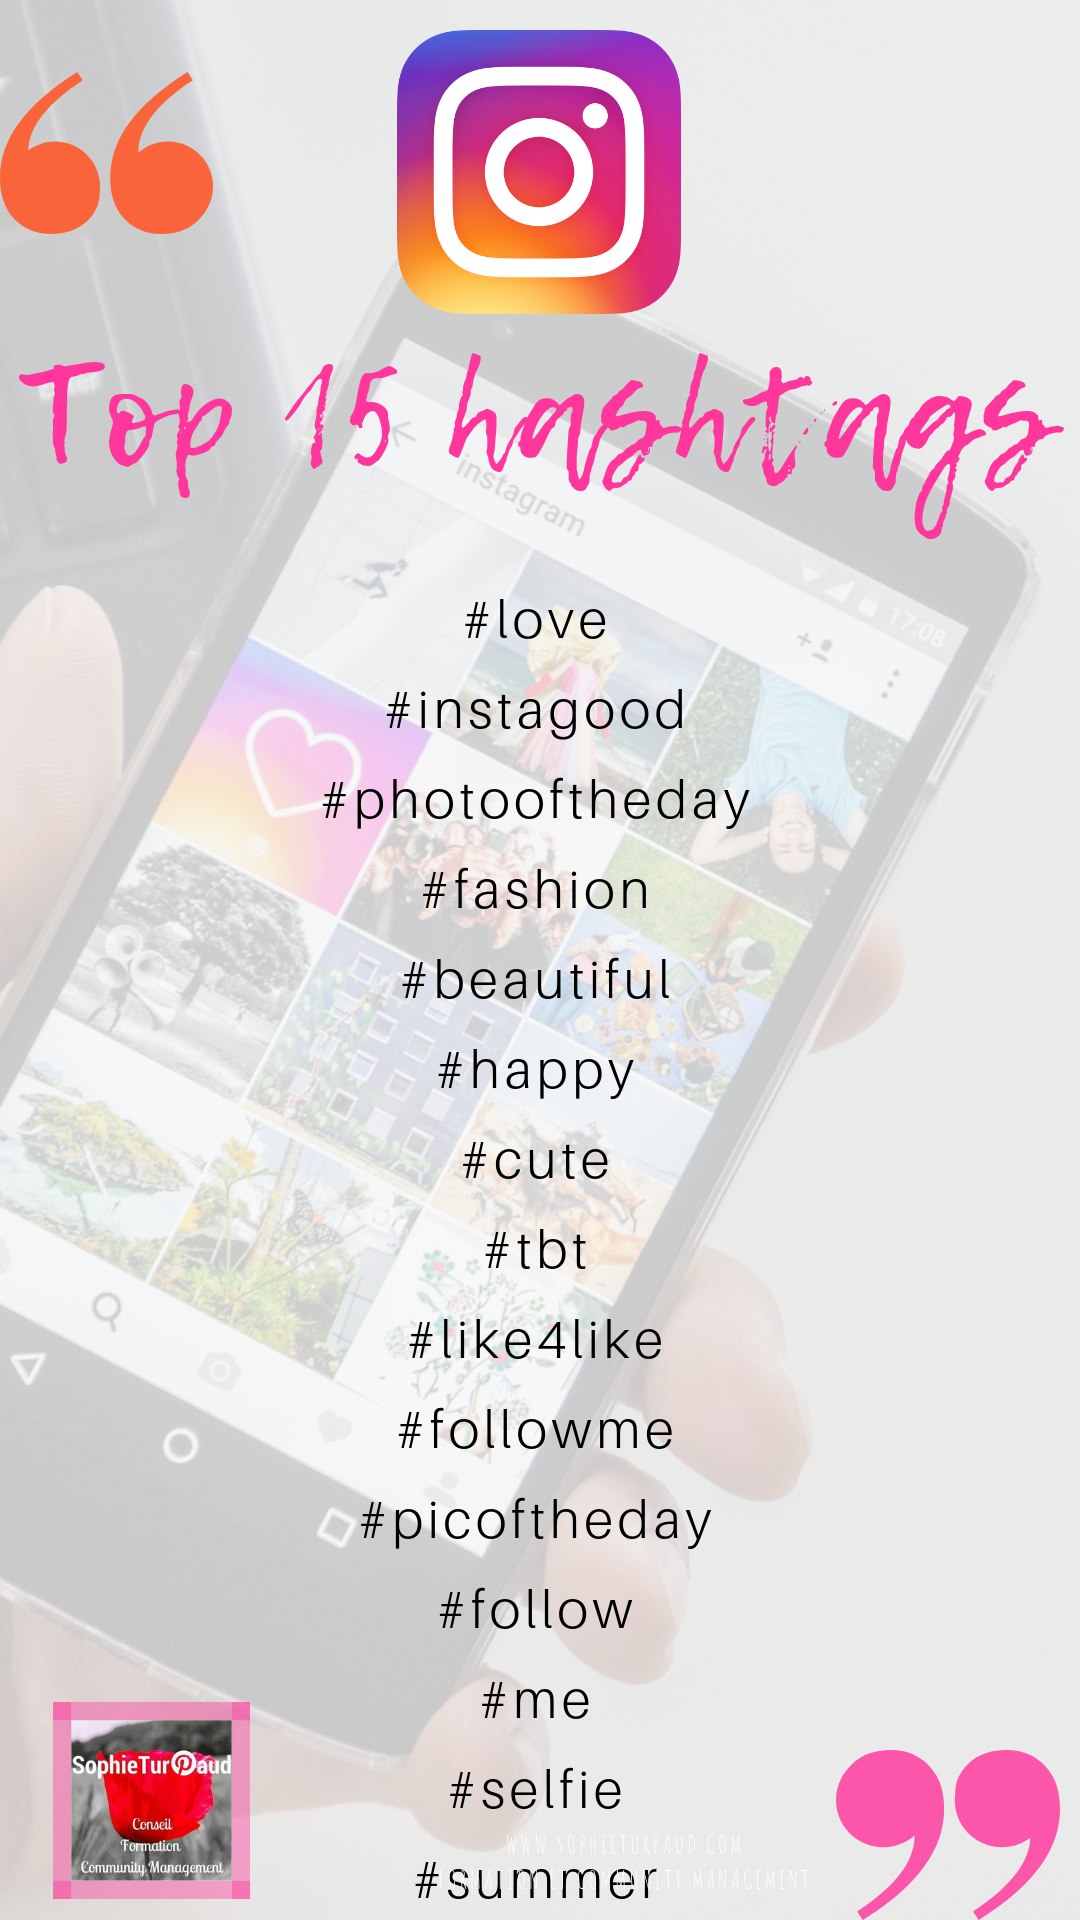 Top 15 hashtags Instagram via @sophieturpaud